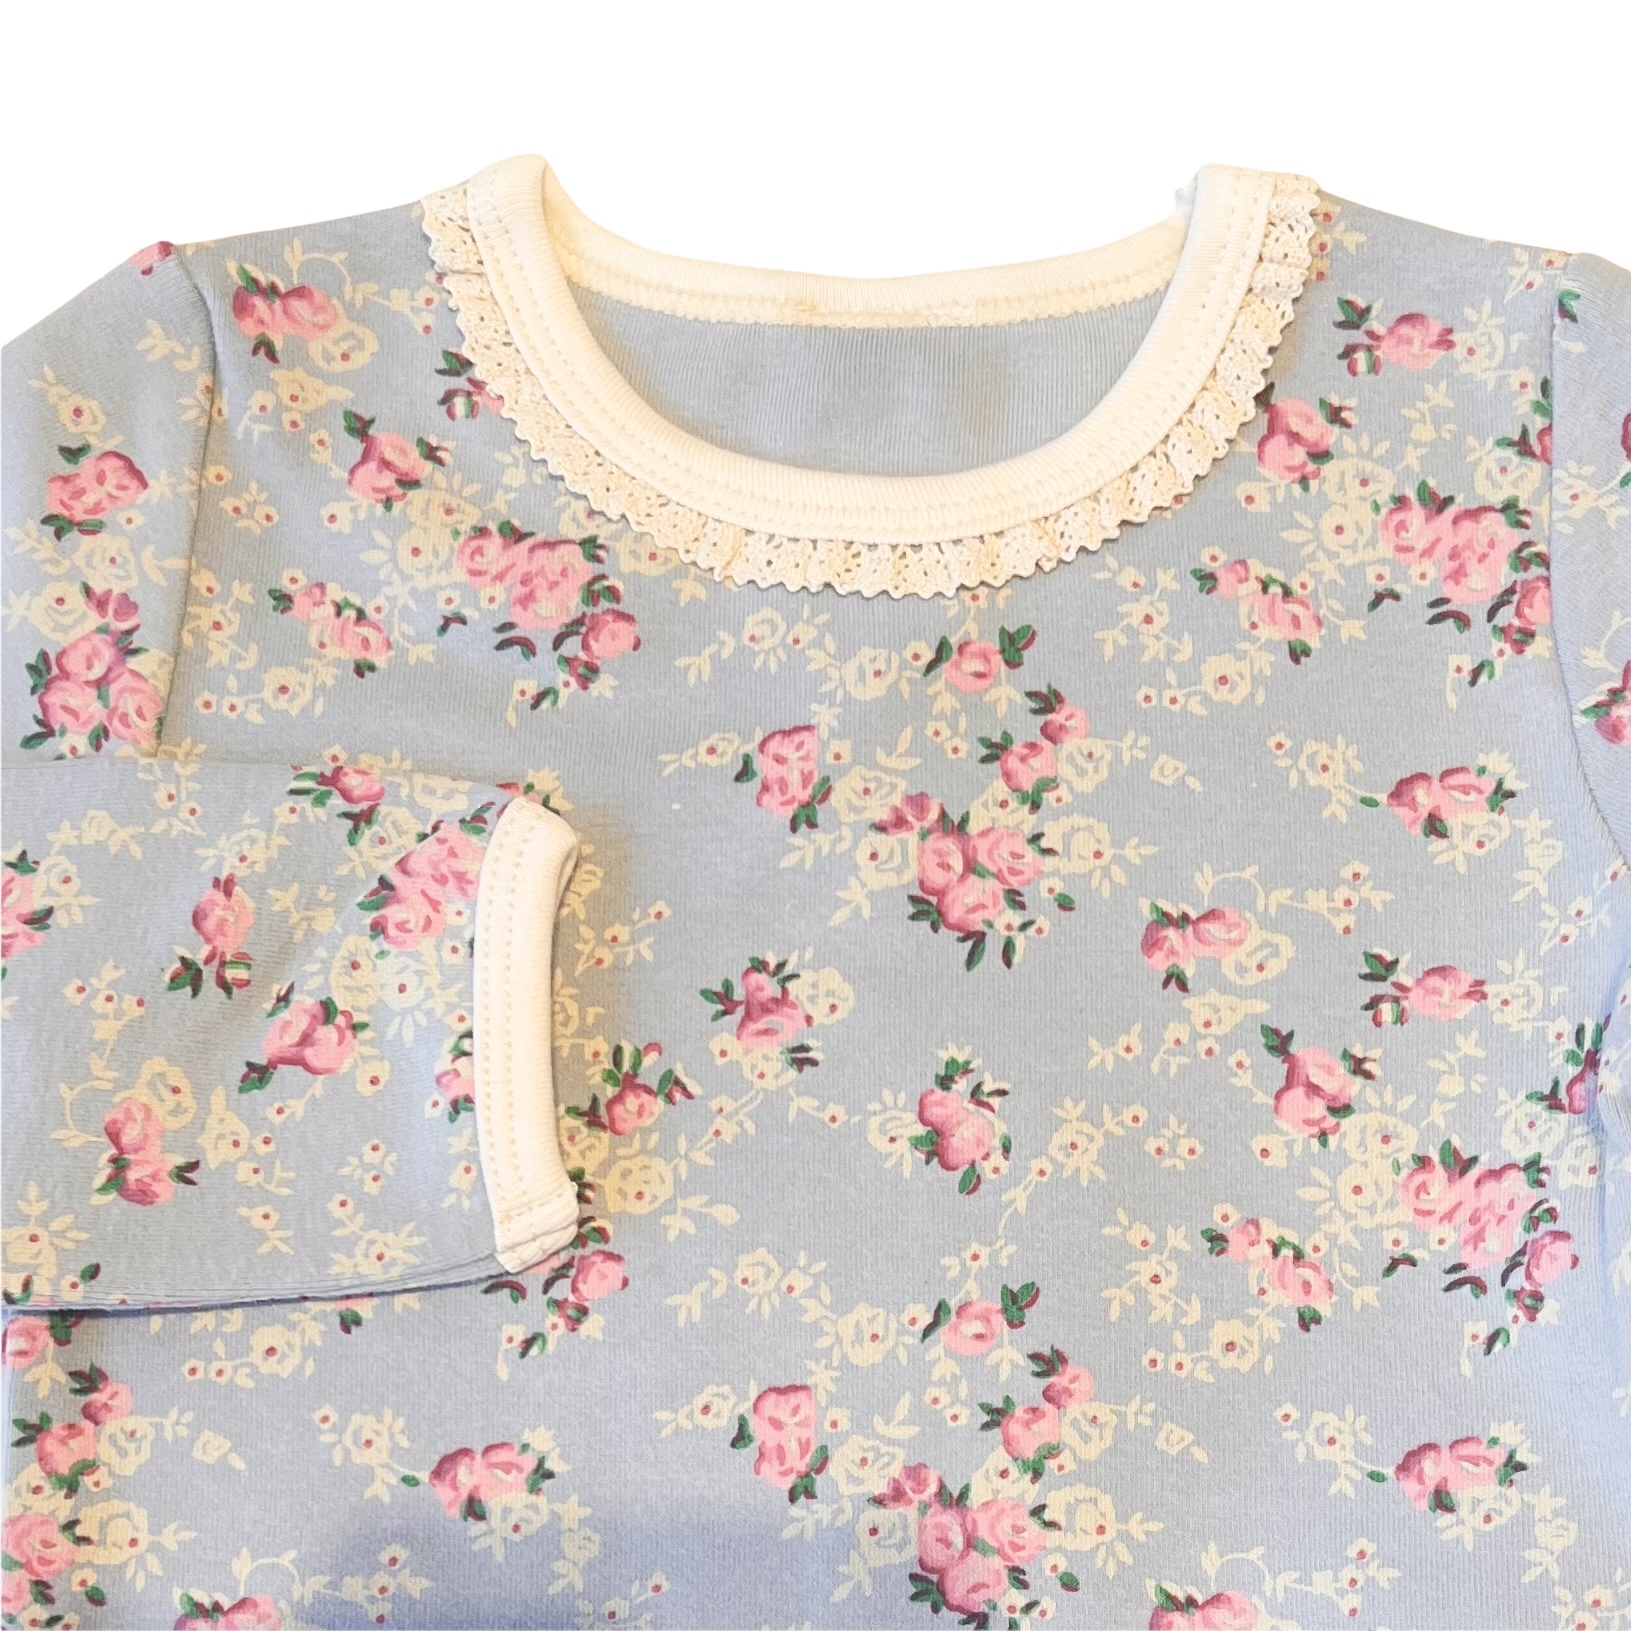 Pajamas with floral prints